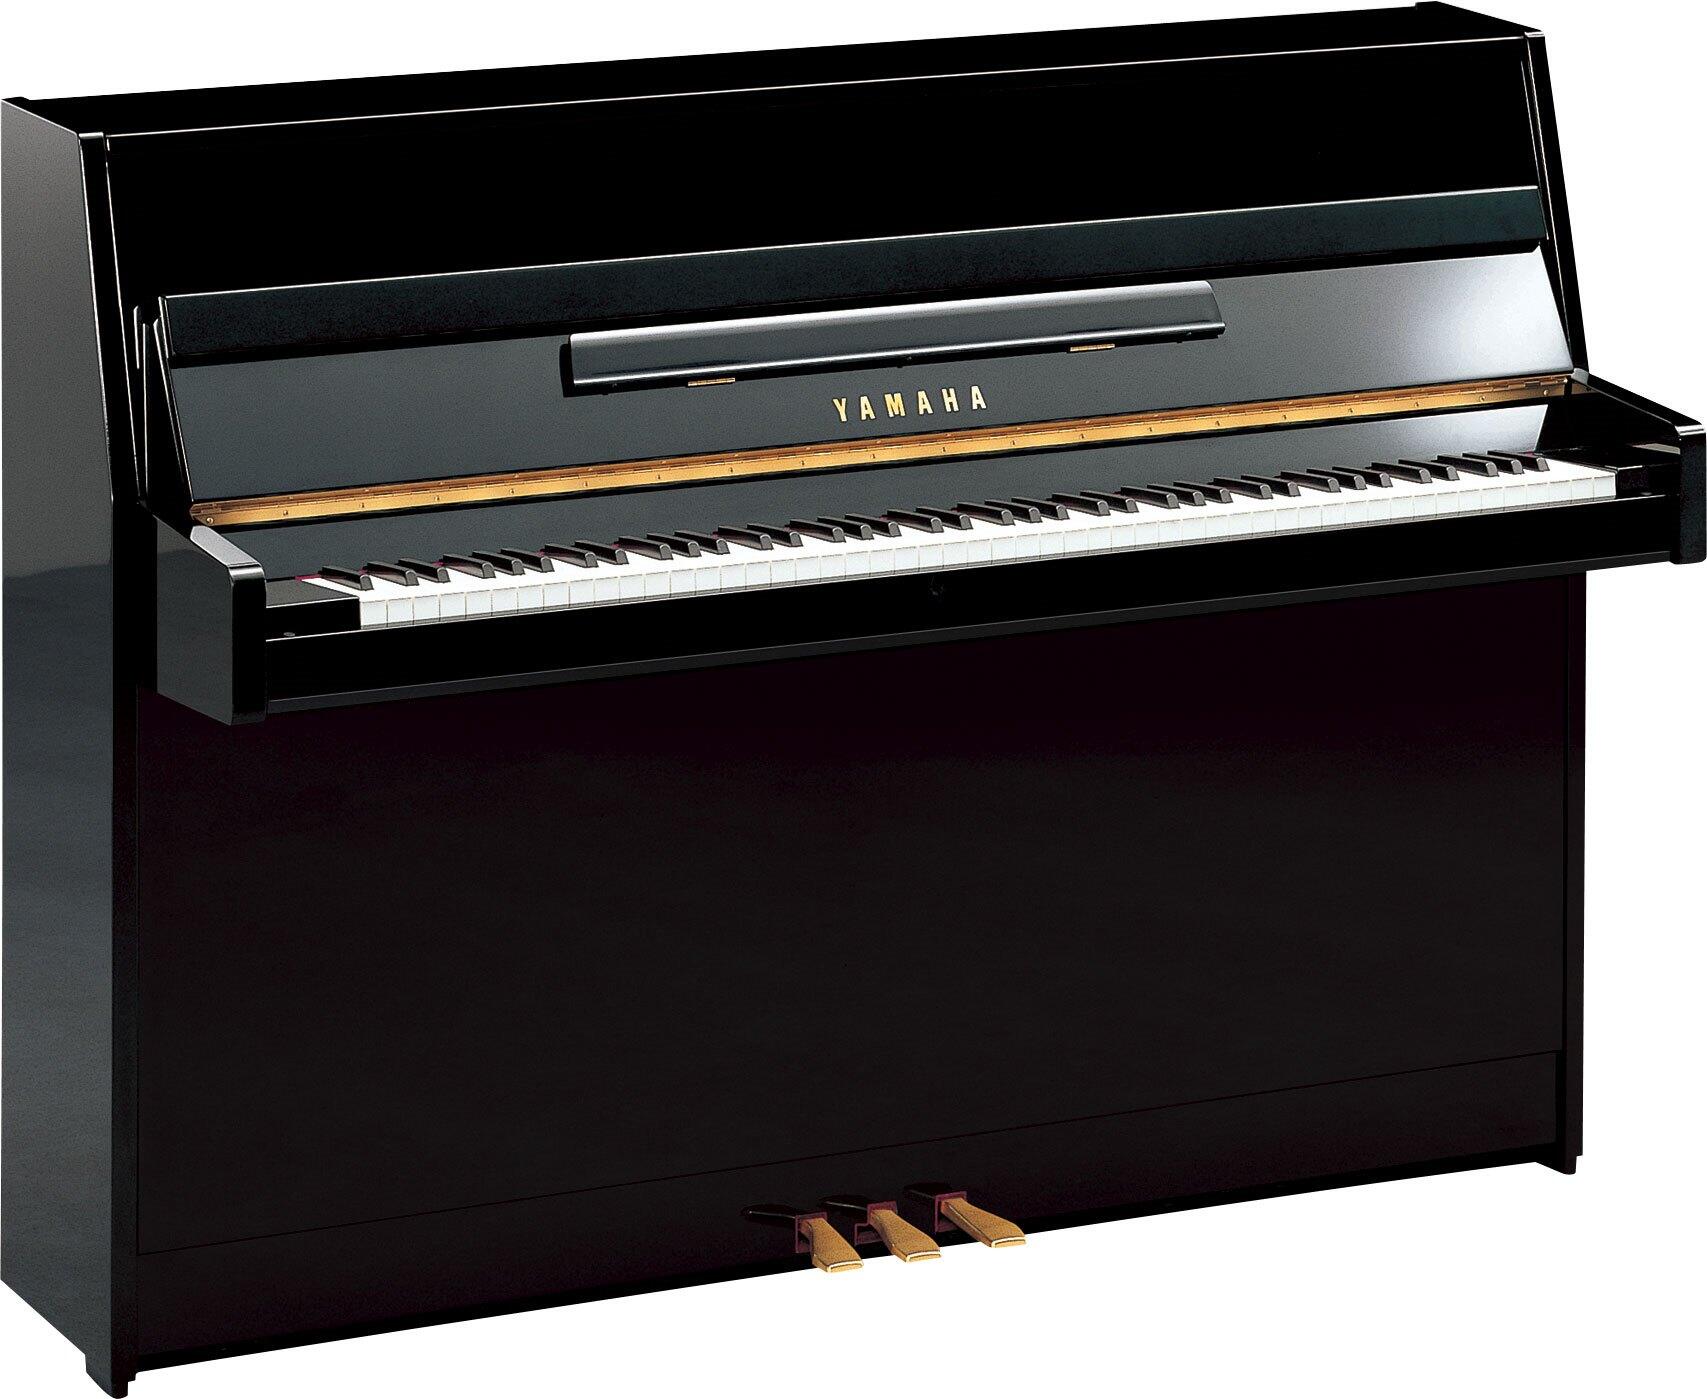 Yamaha Pianos Acoustic B1 PE Noir poli-brillant 109 cm : photo 1